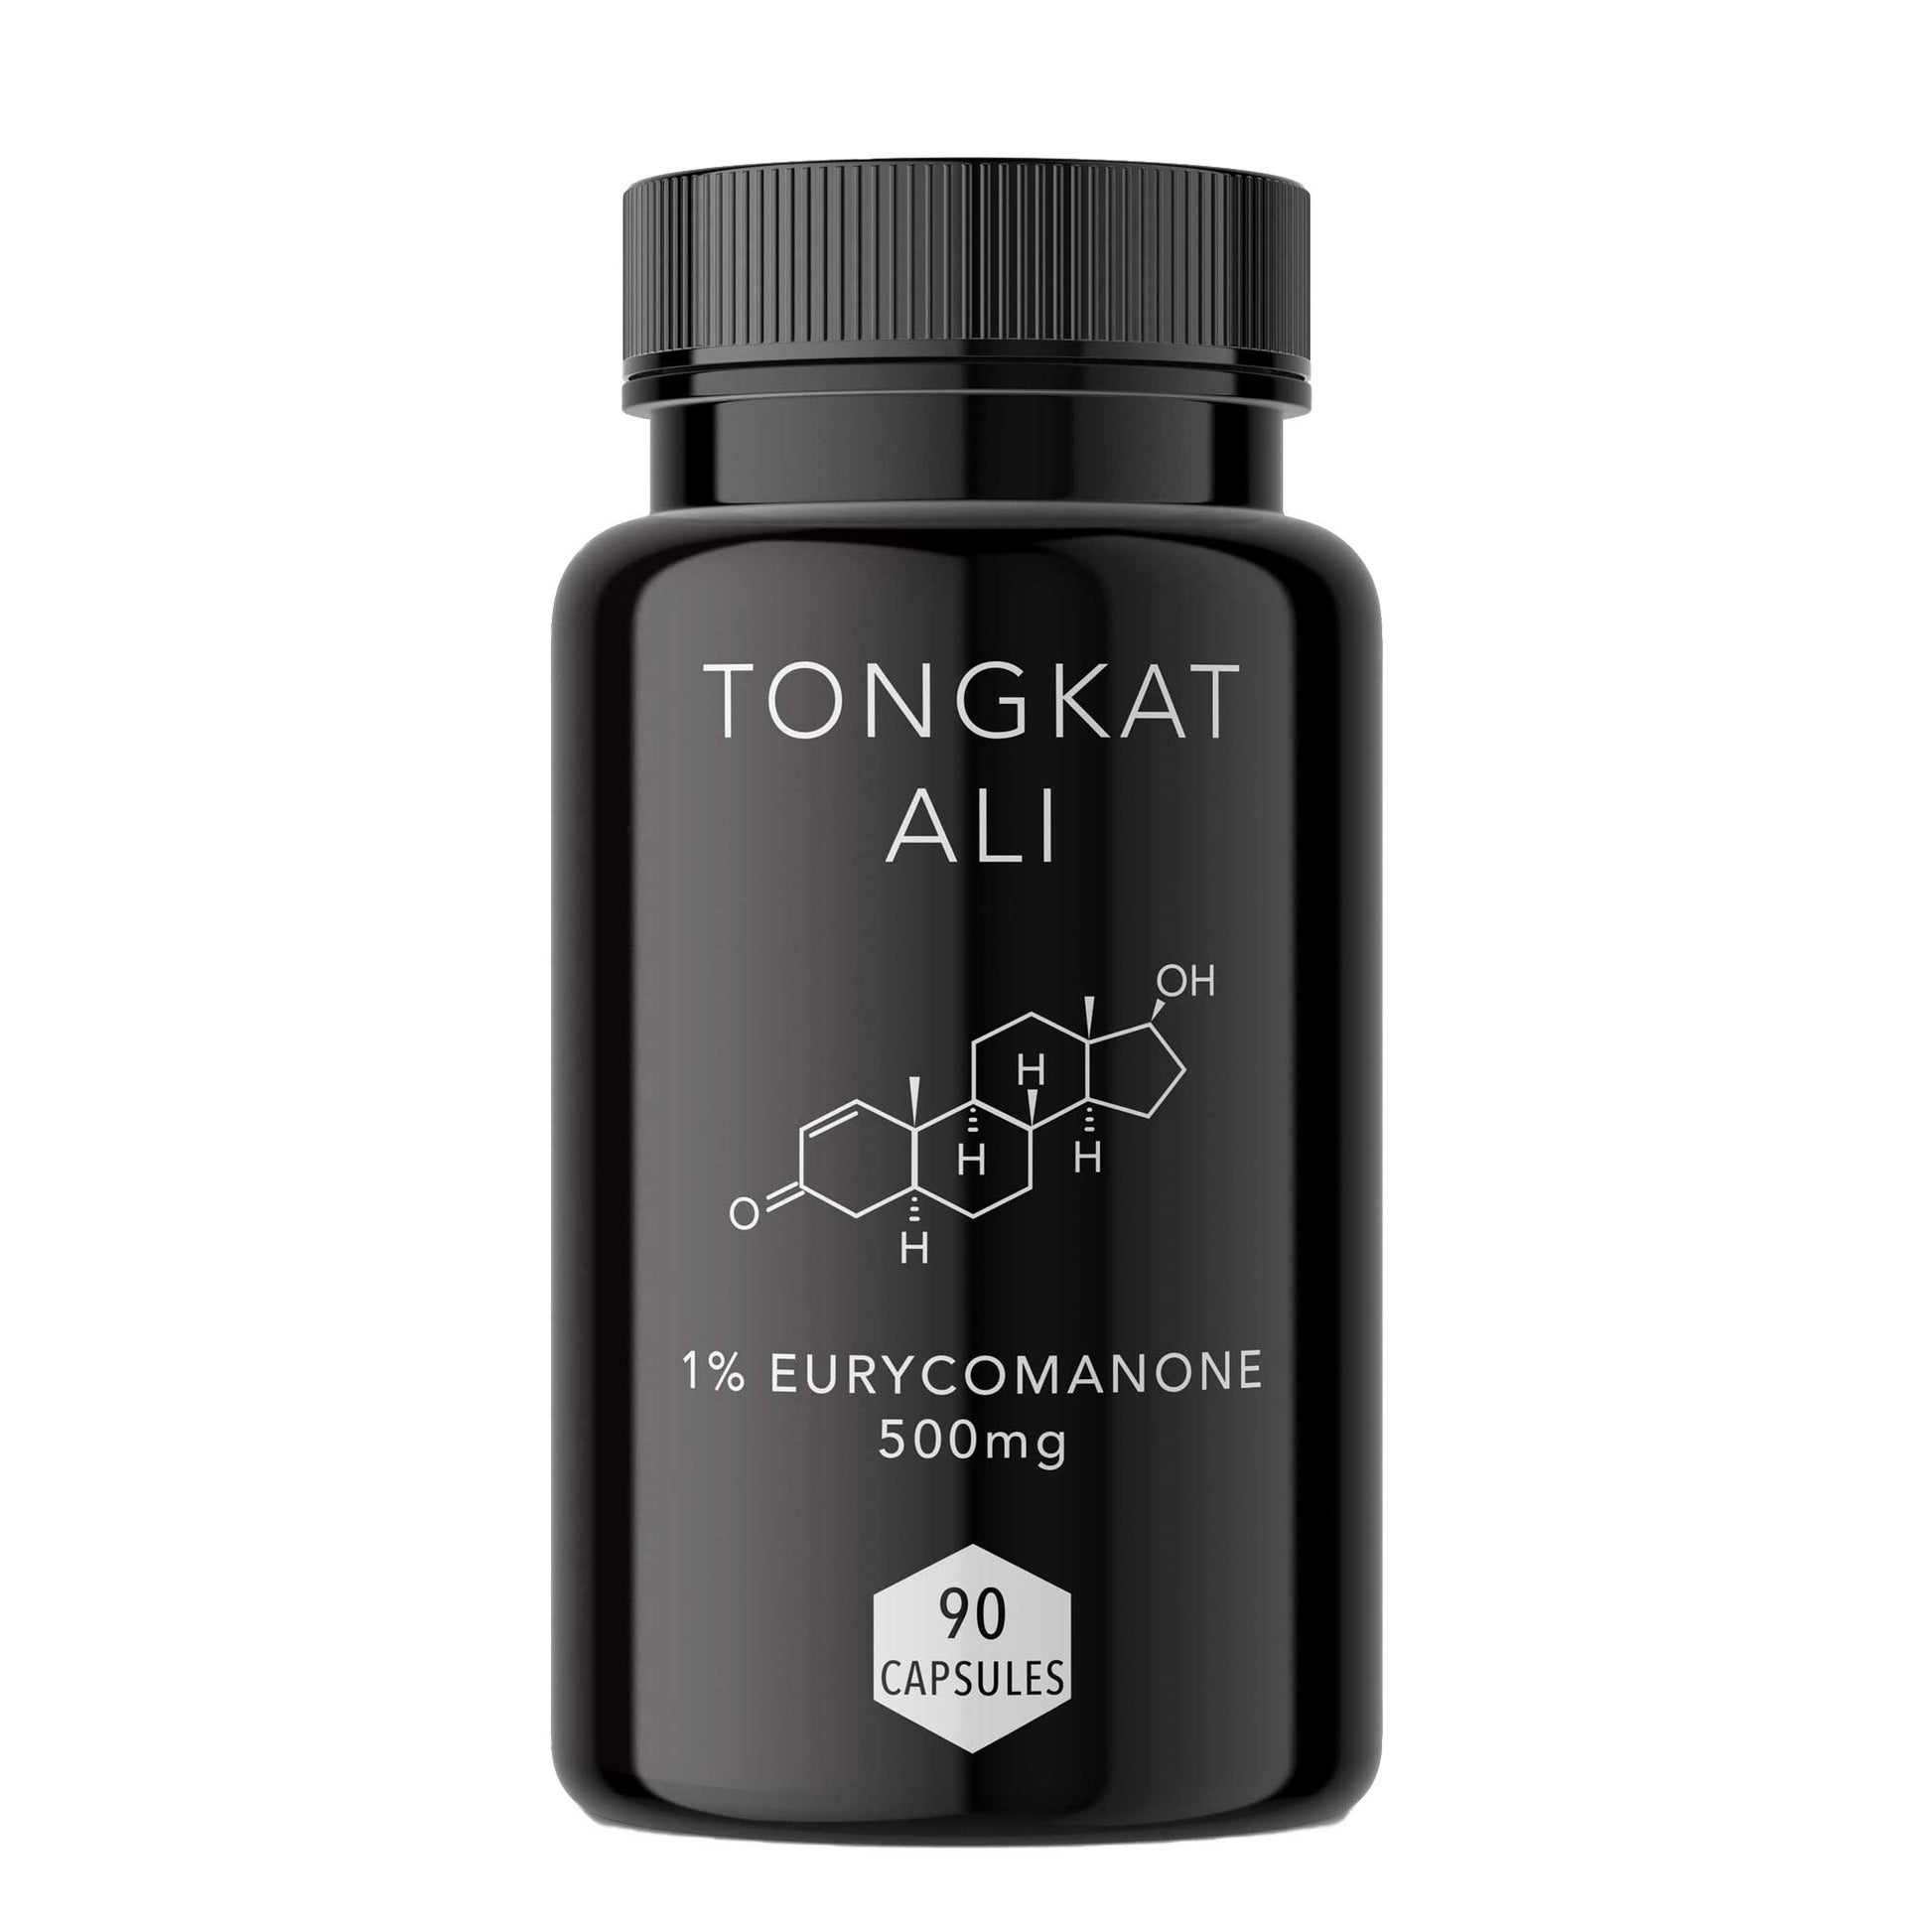 Tongkat Ali 1% eurycomanone capsule bottle